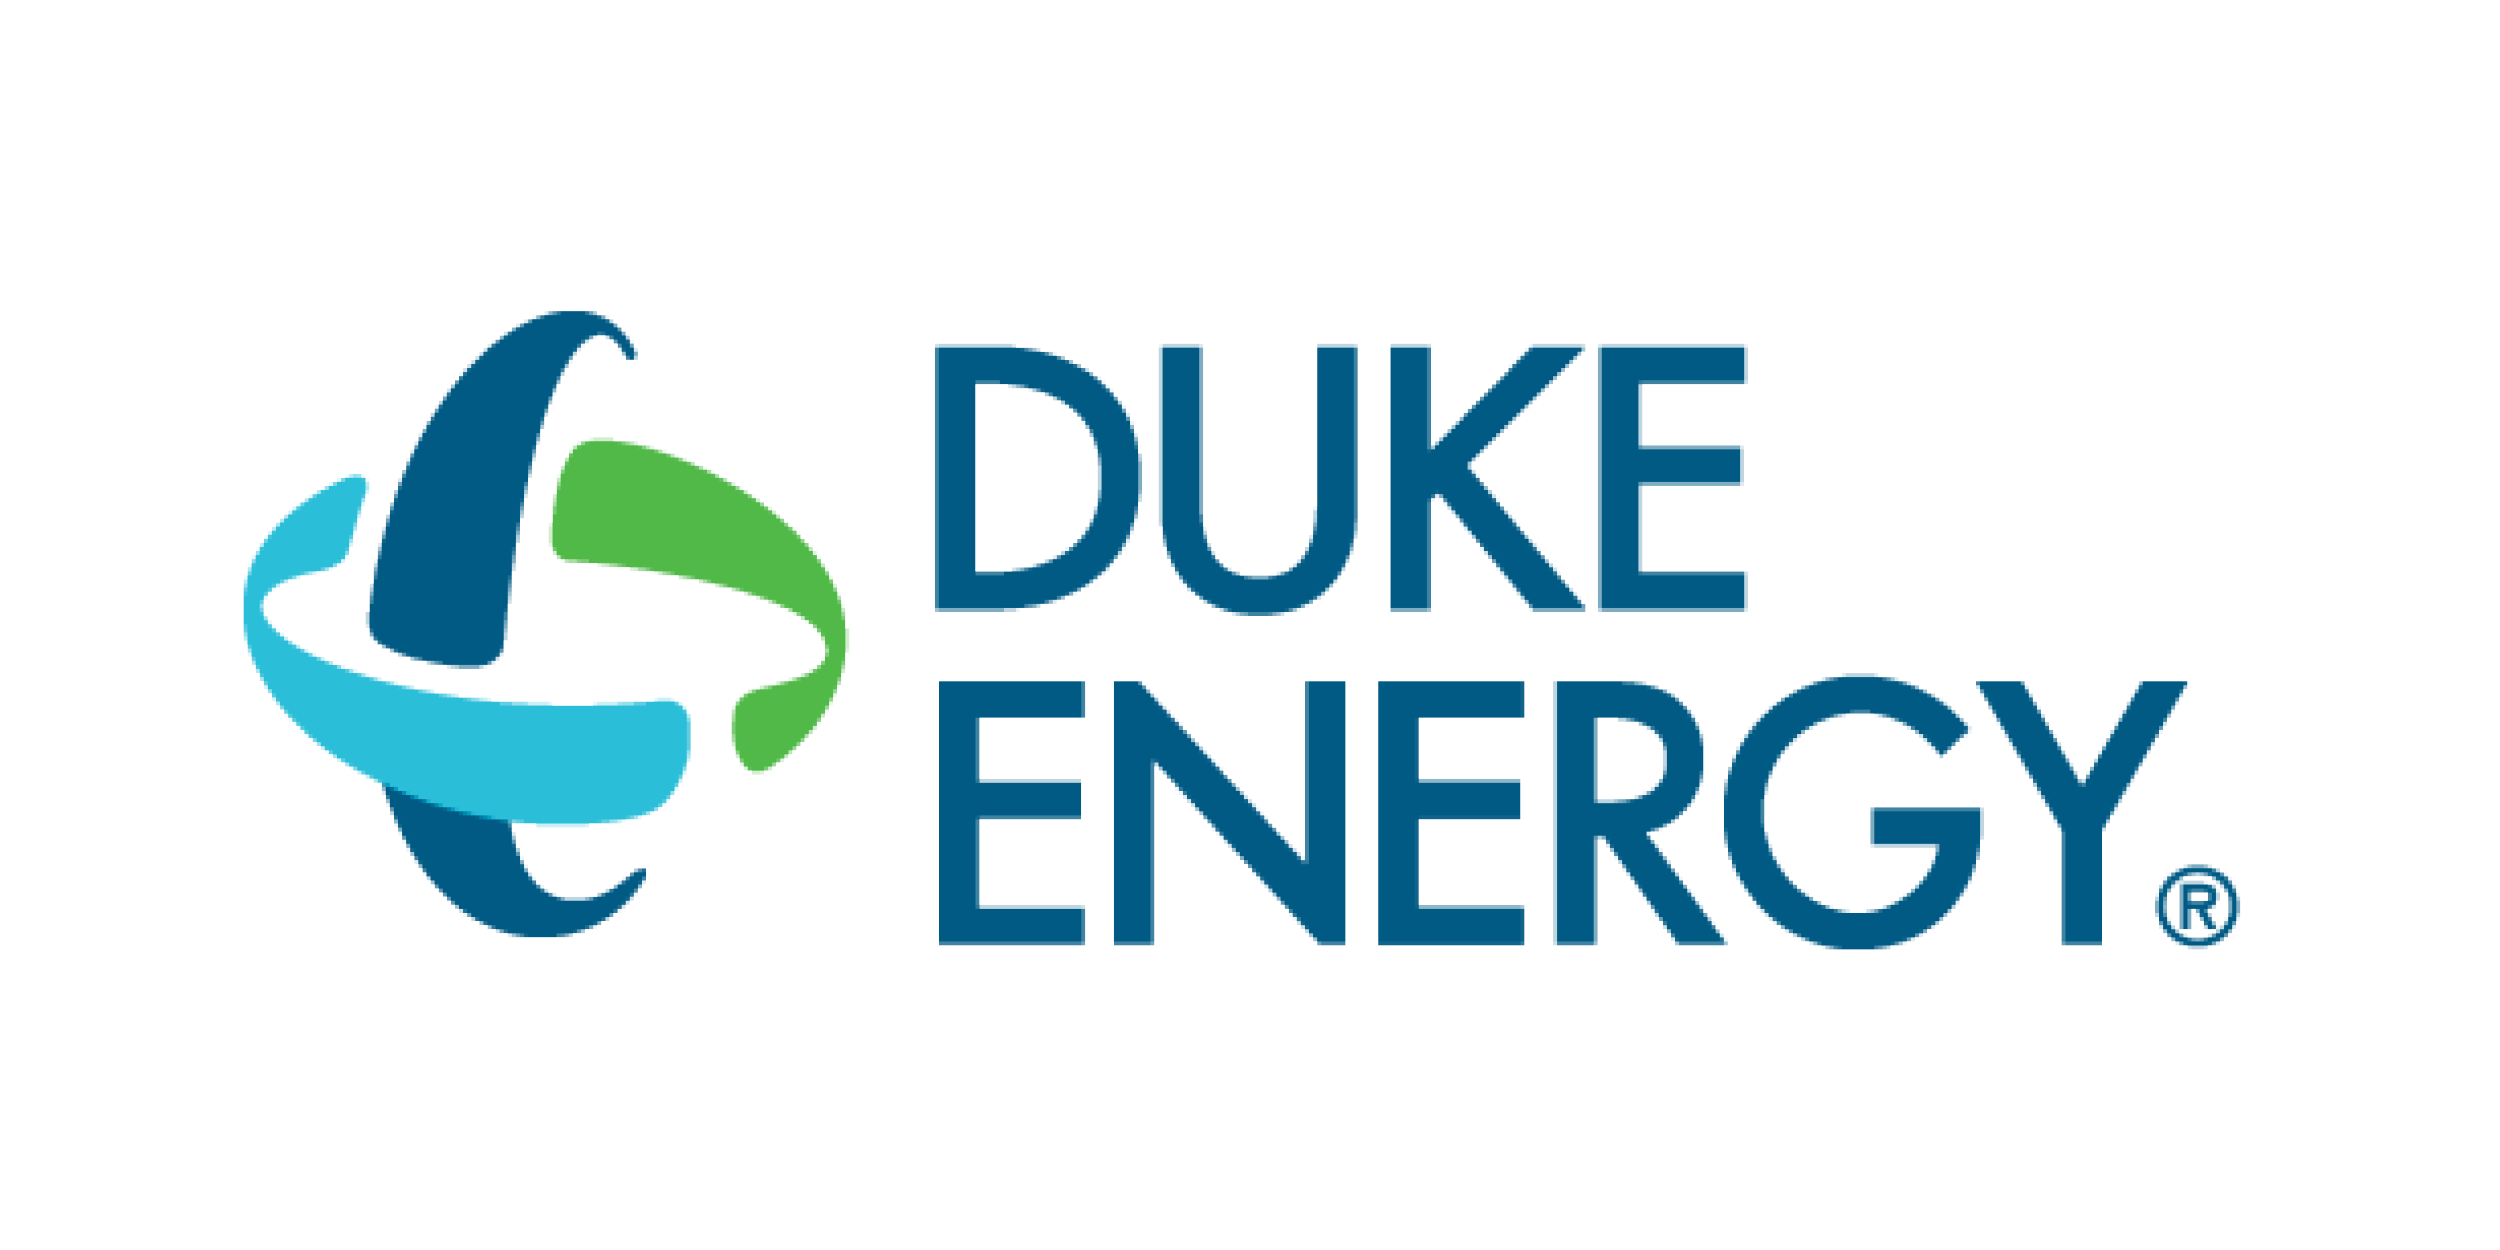 north carolina companies fortune 500 list - duke energy